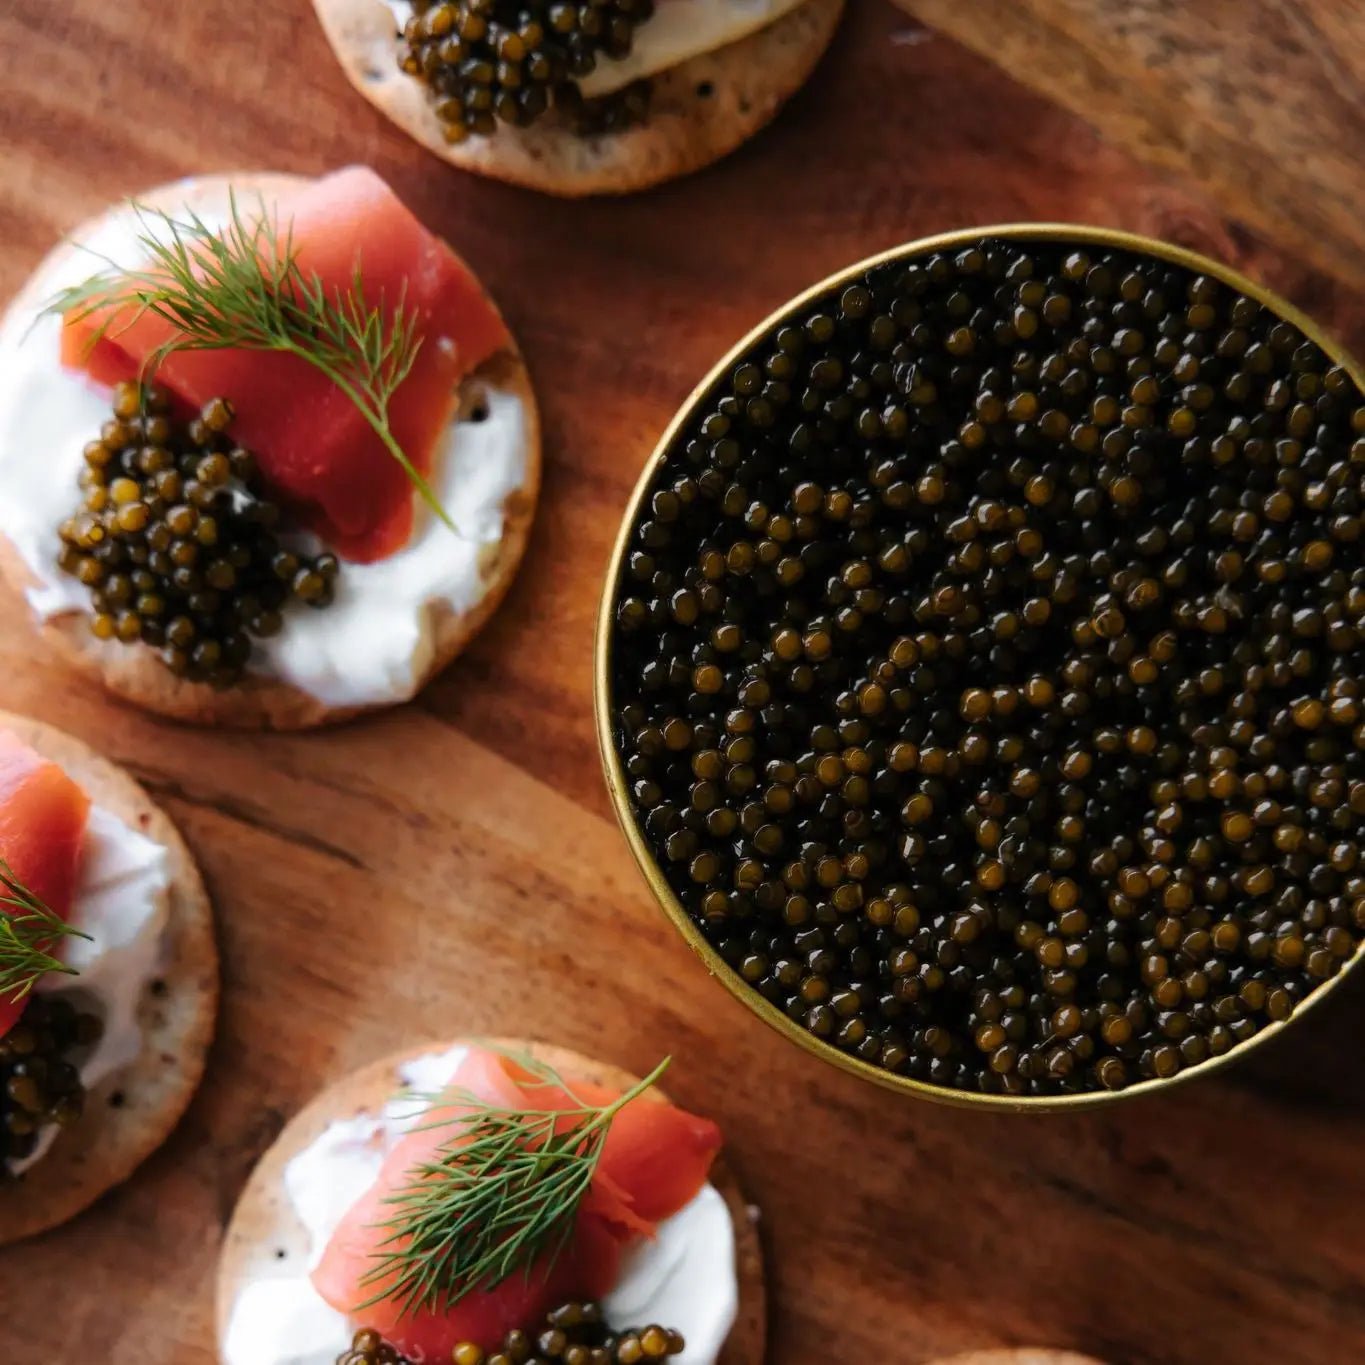 Best caviar in the world - Wonders of Luxury